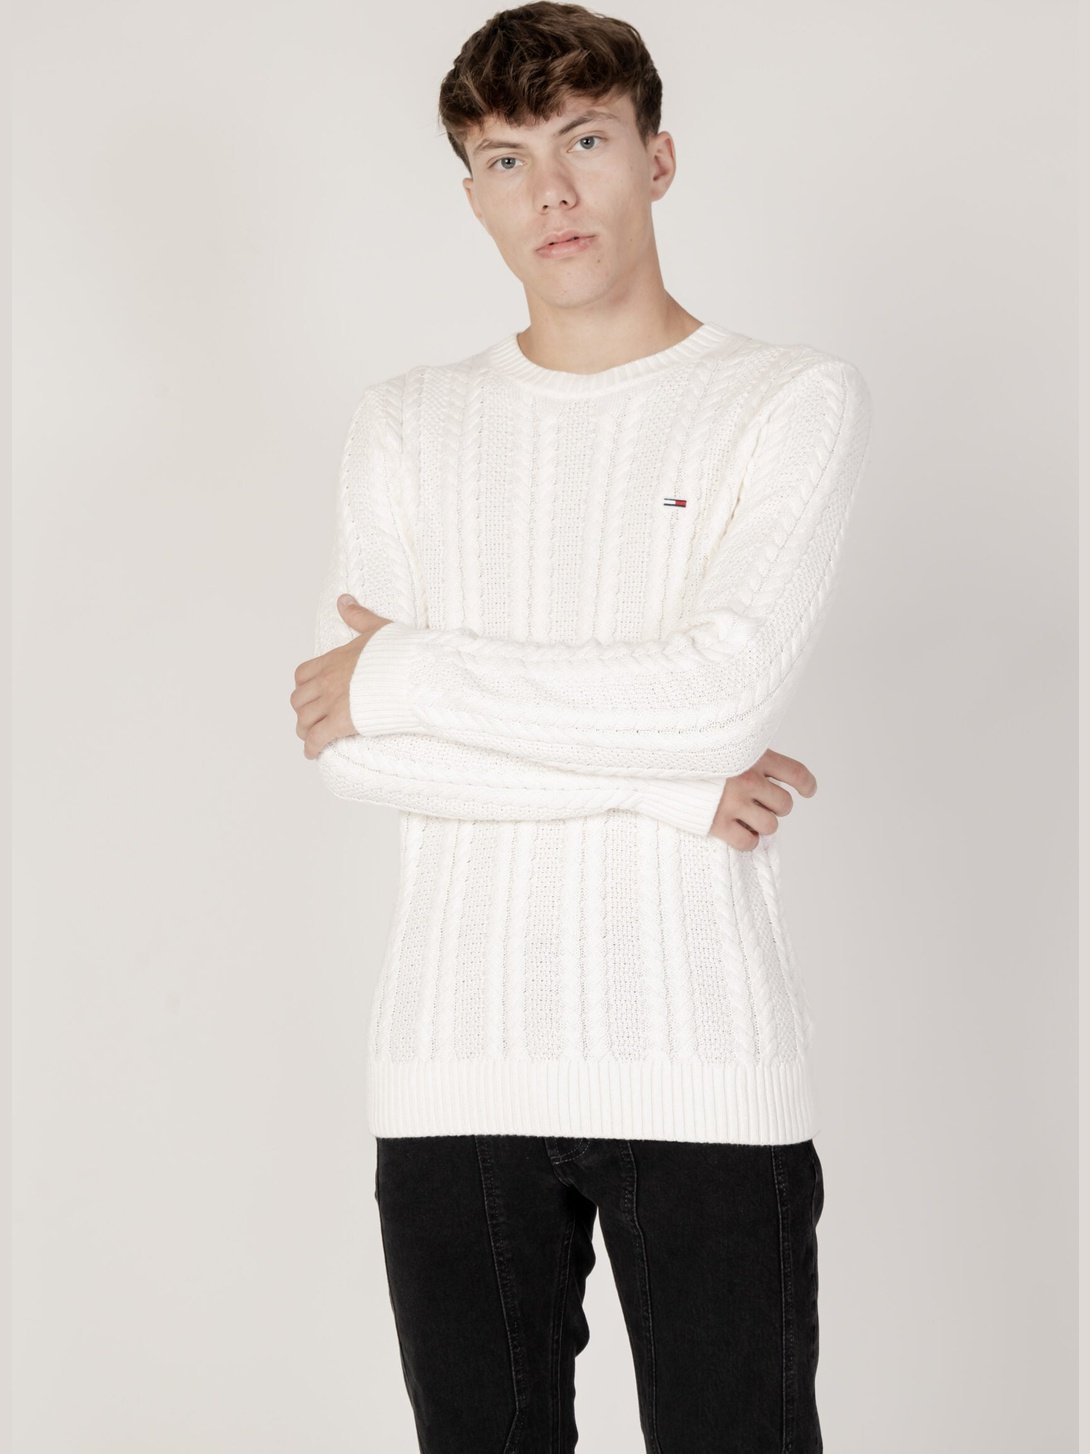 TJM regular cable sweater - white